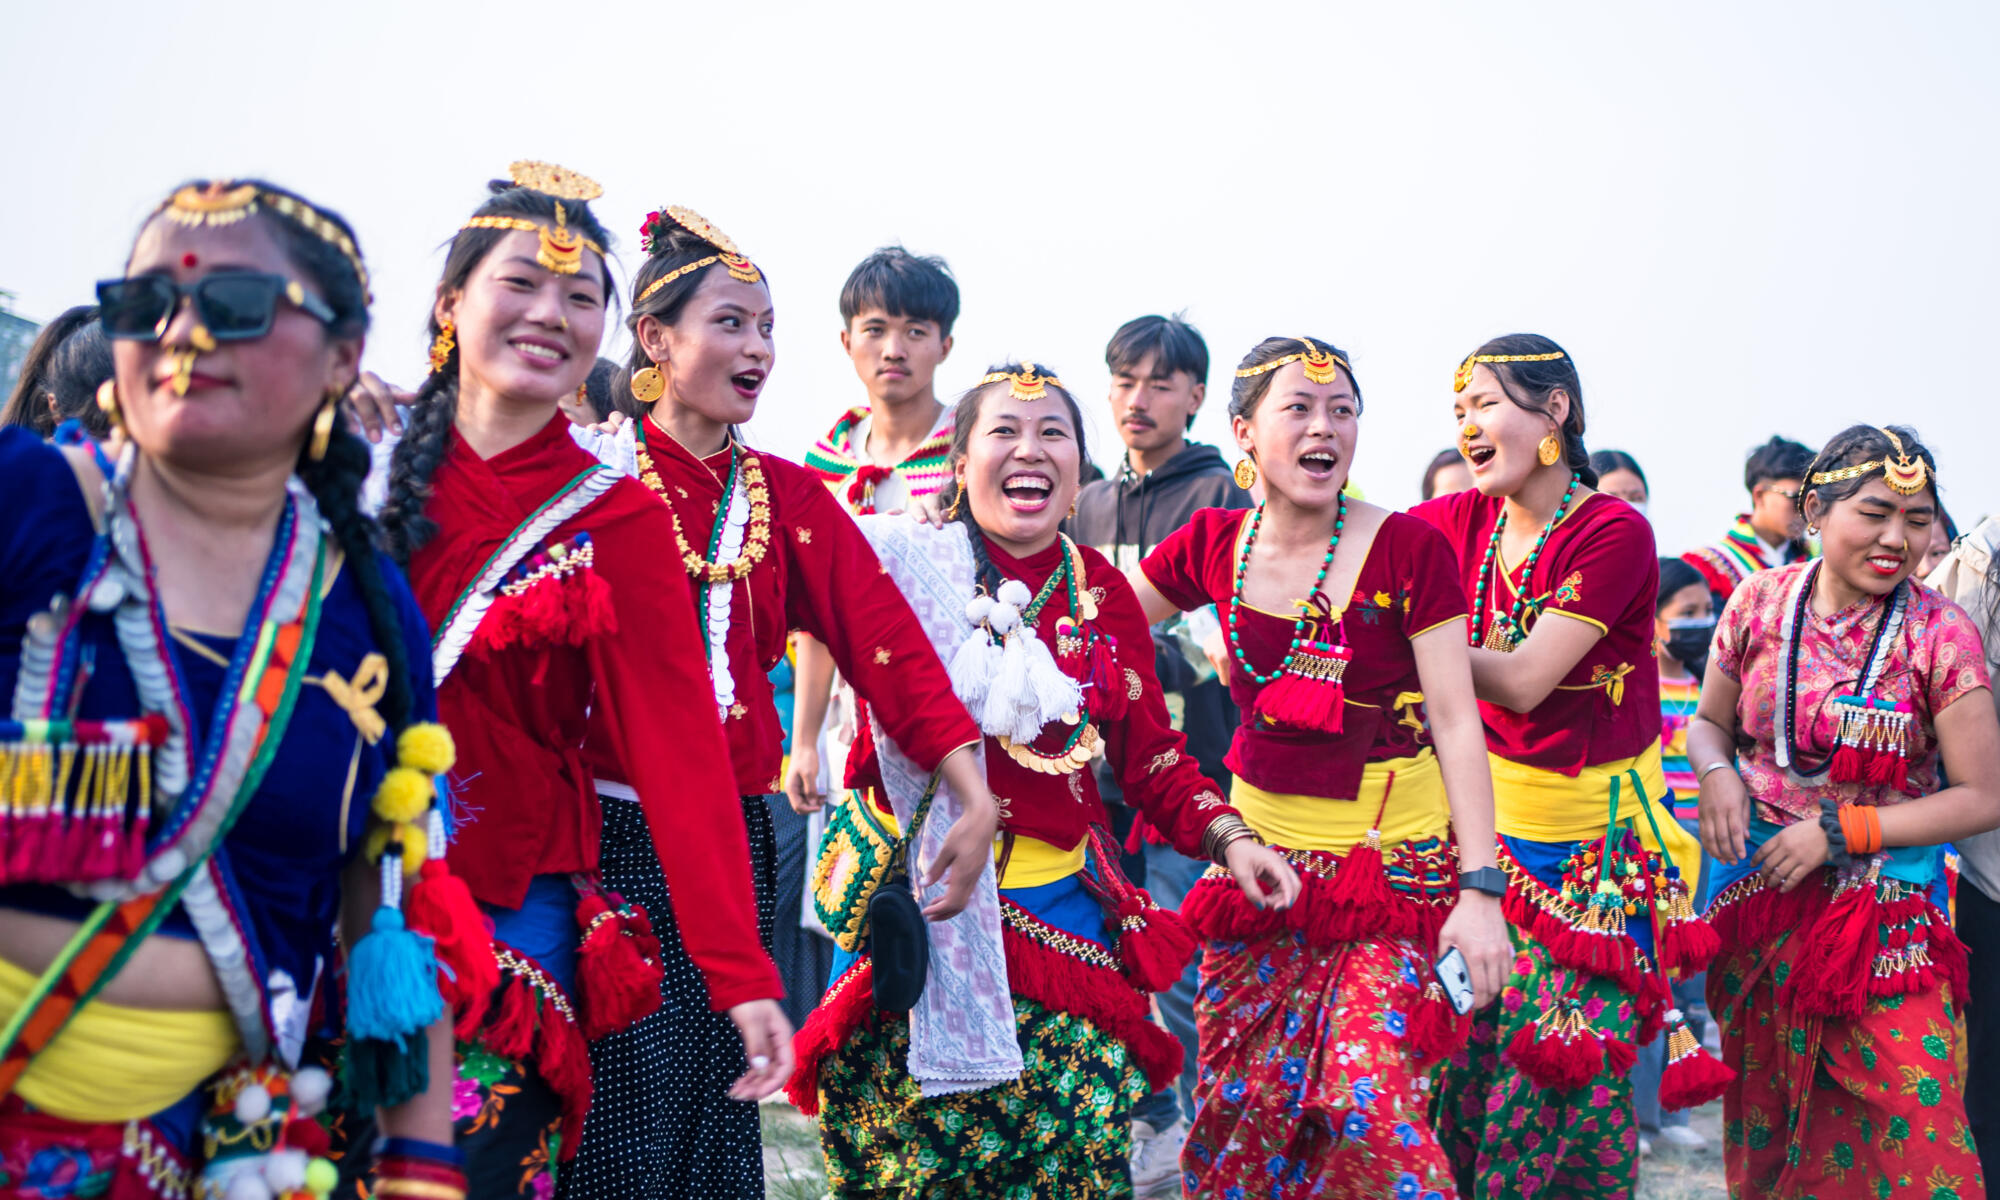 Kirat community wearing traditional dress, playing traditional musical instrument and celebrating the Sakela Ubhauli festival in Kathmandu, Nepal, on Saturday May 13, 2023.